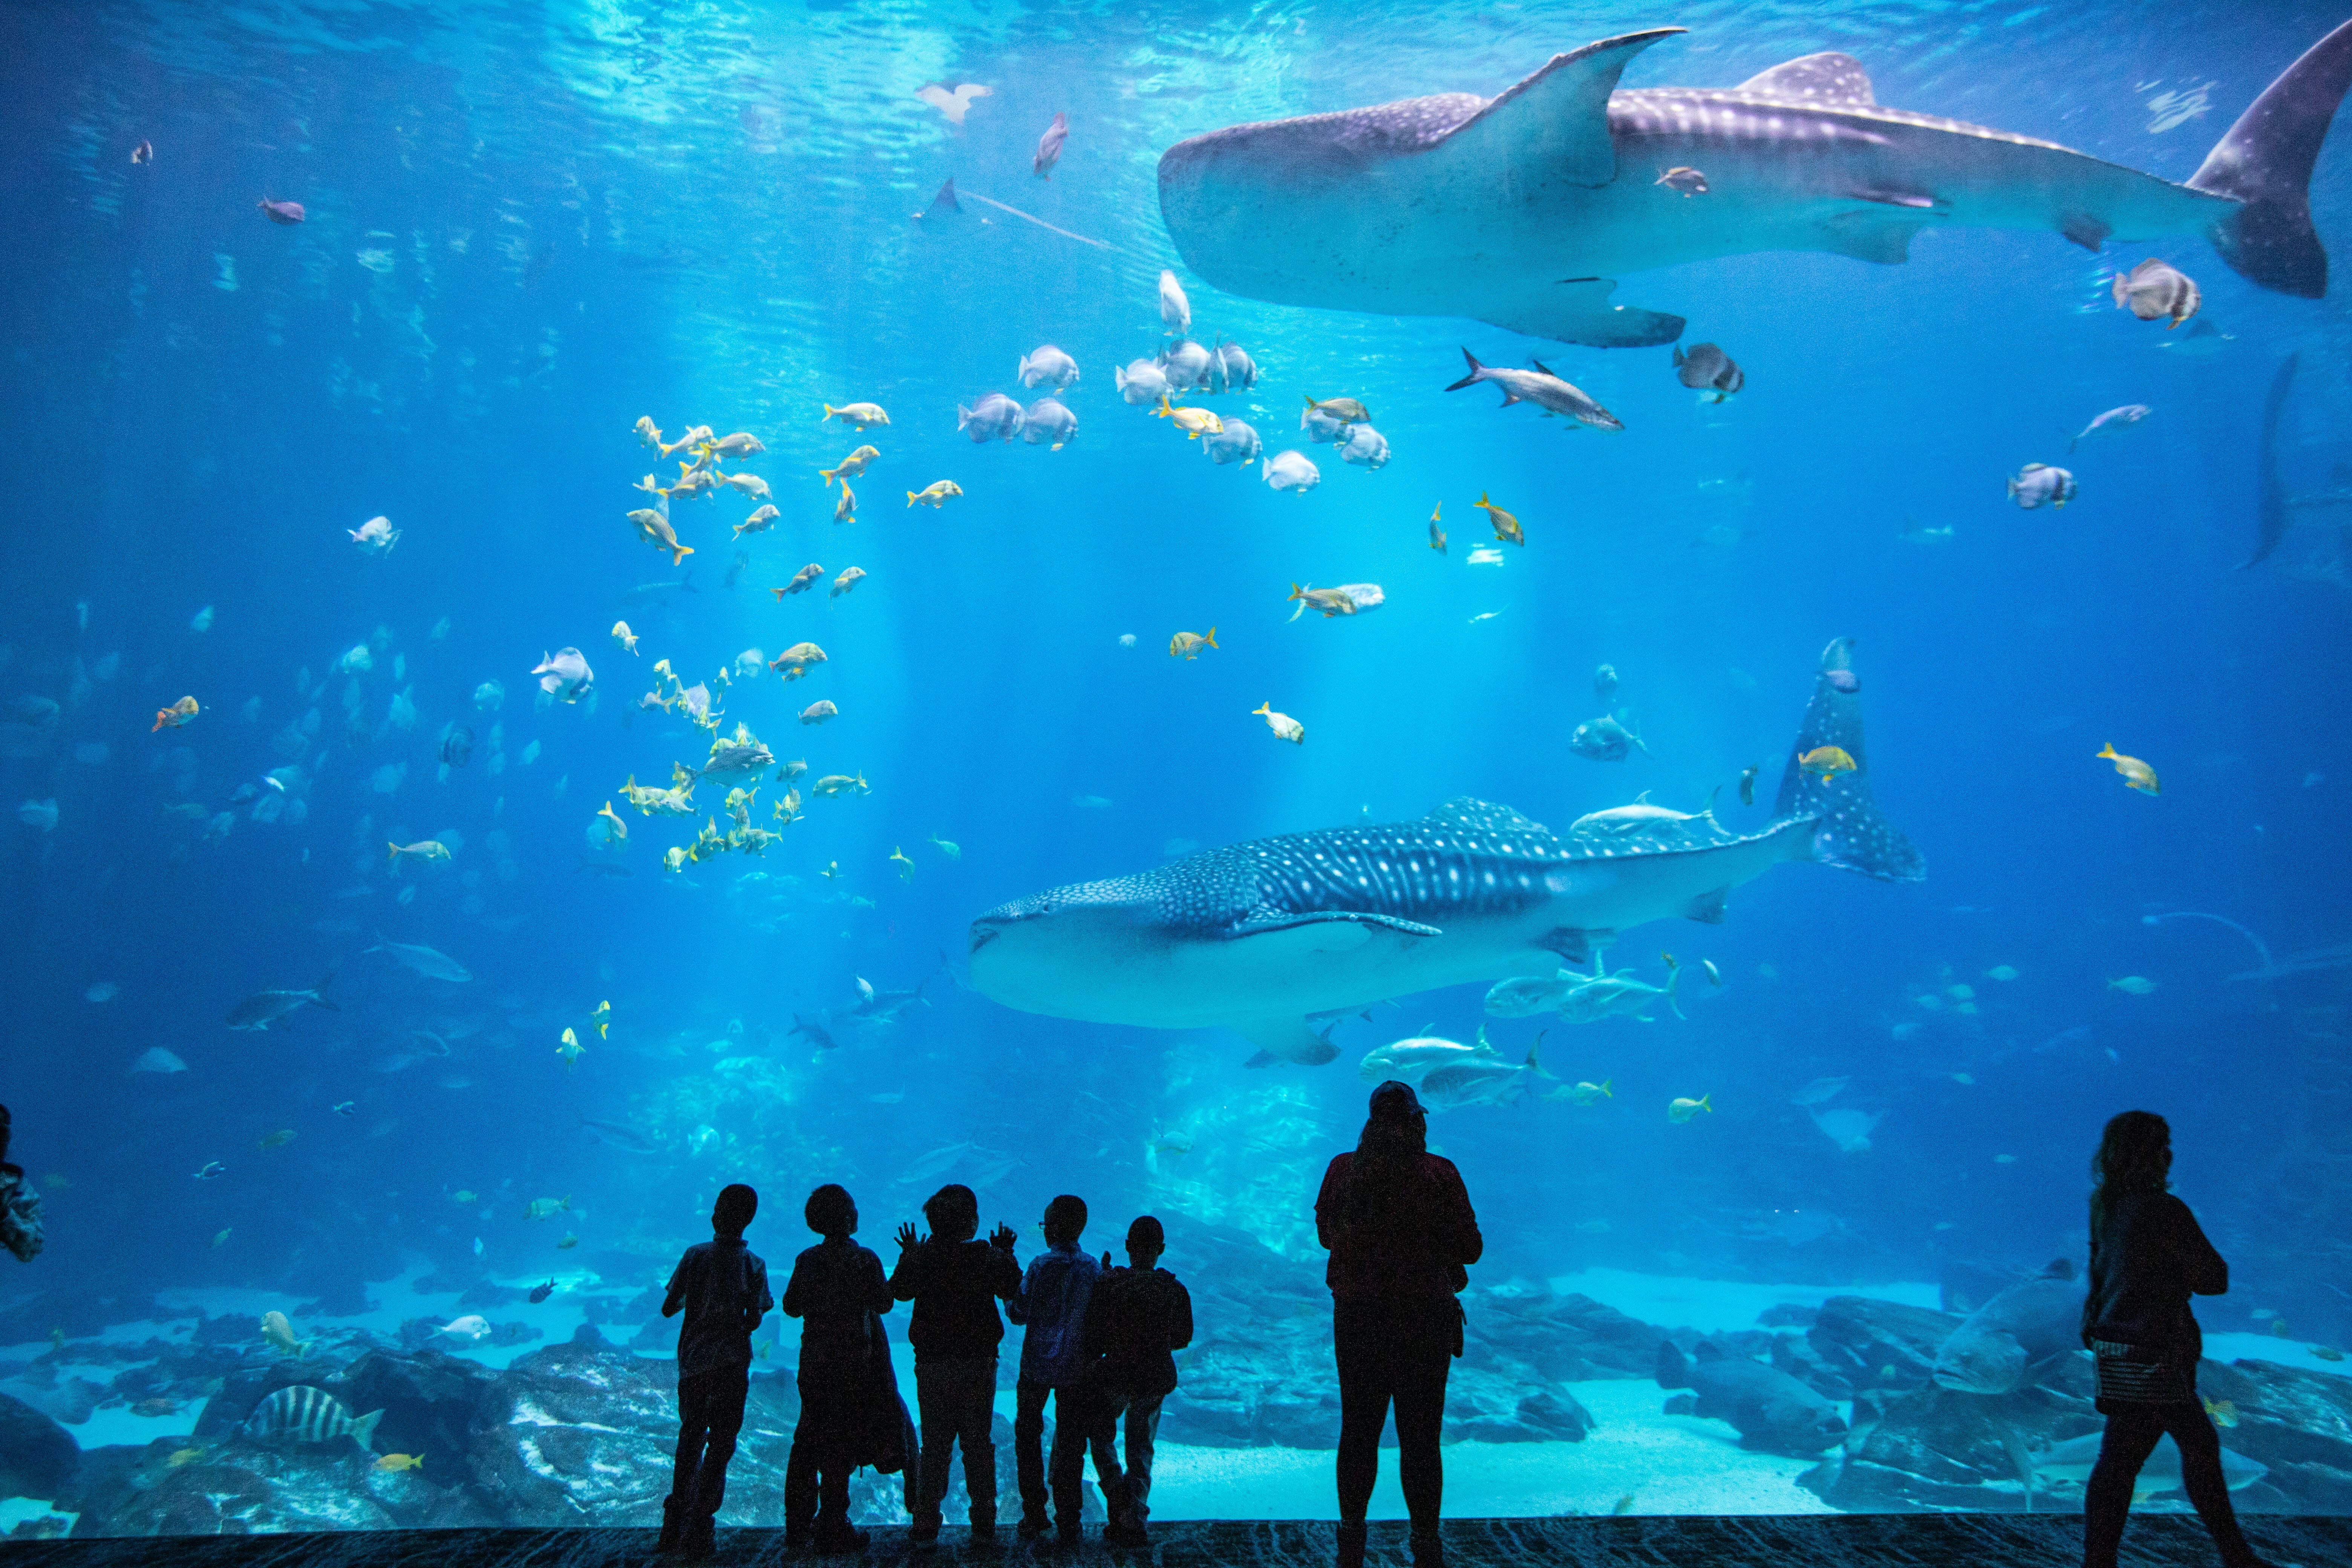 Does Atlanta Aquarium Offer Spectacular Whale Sharks Encounters?